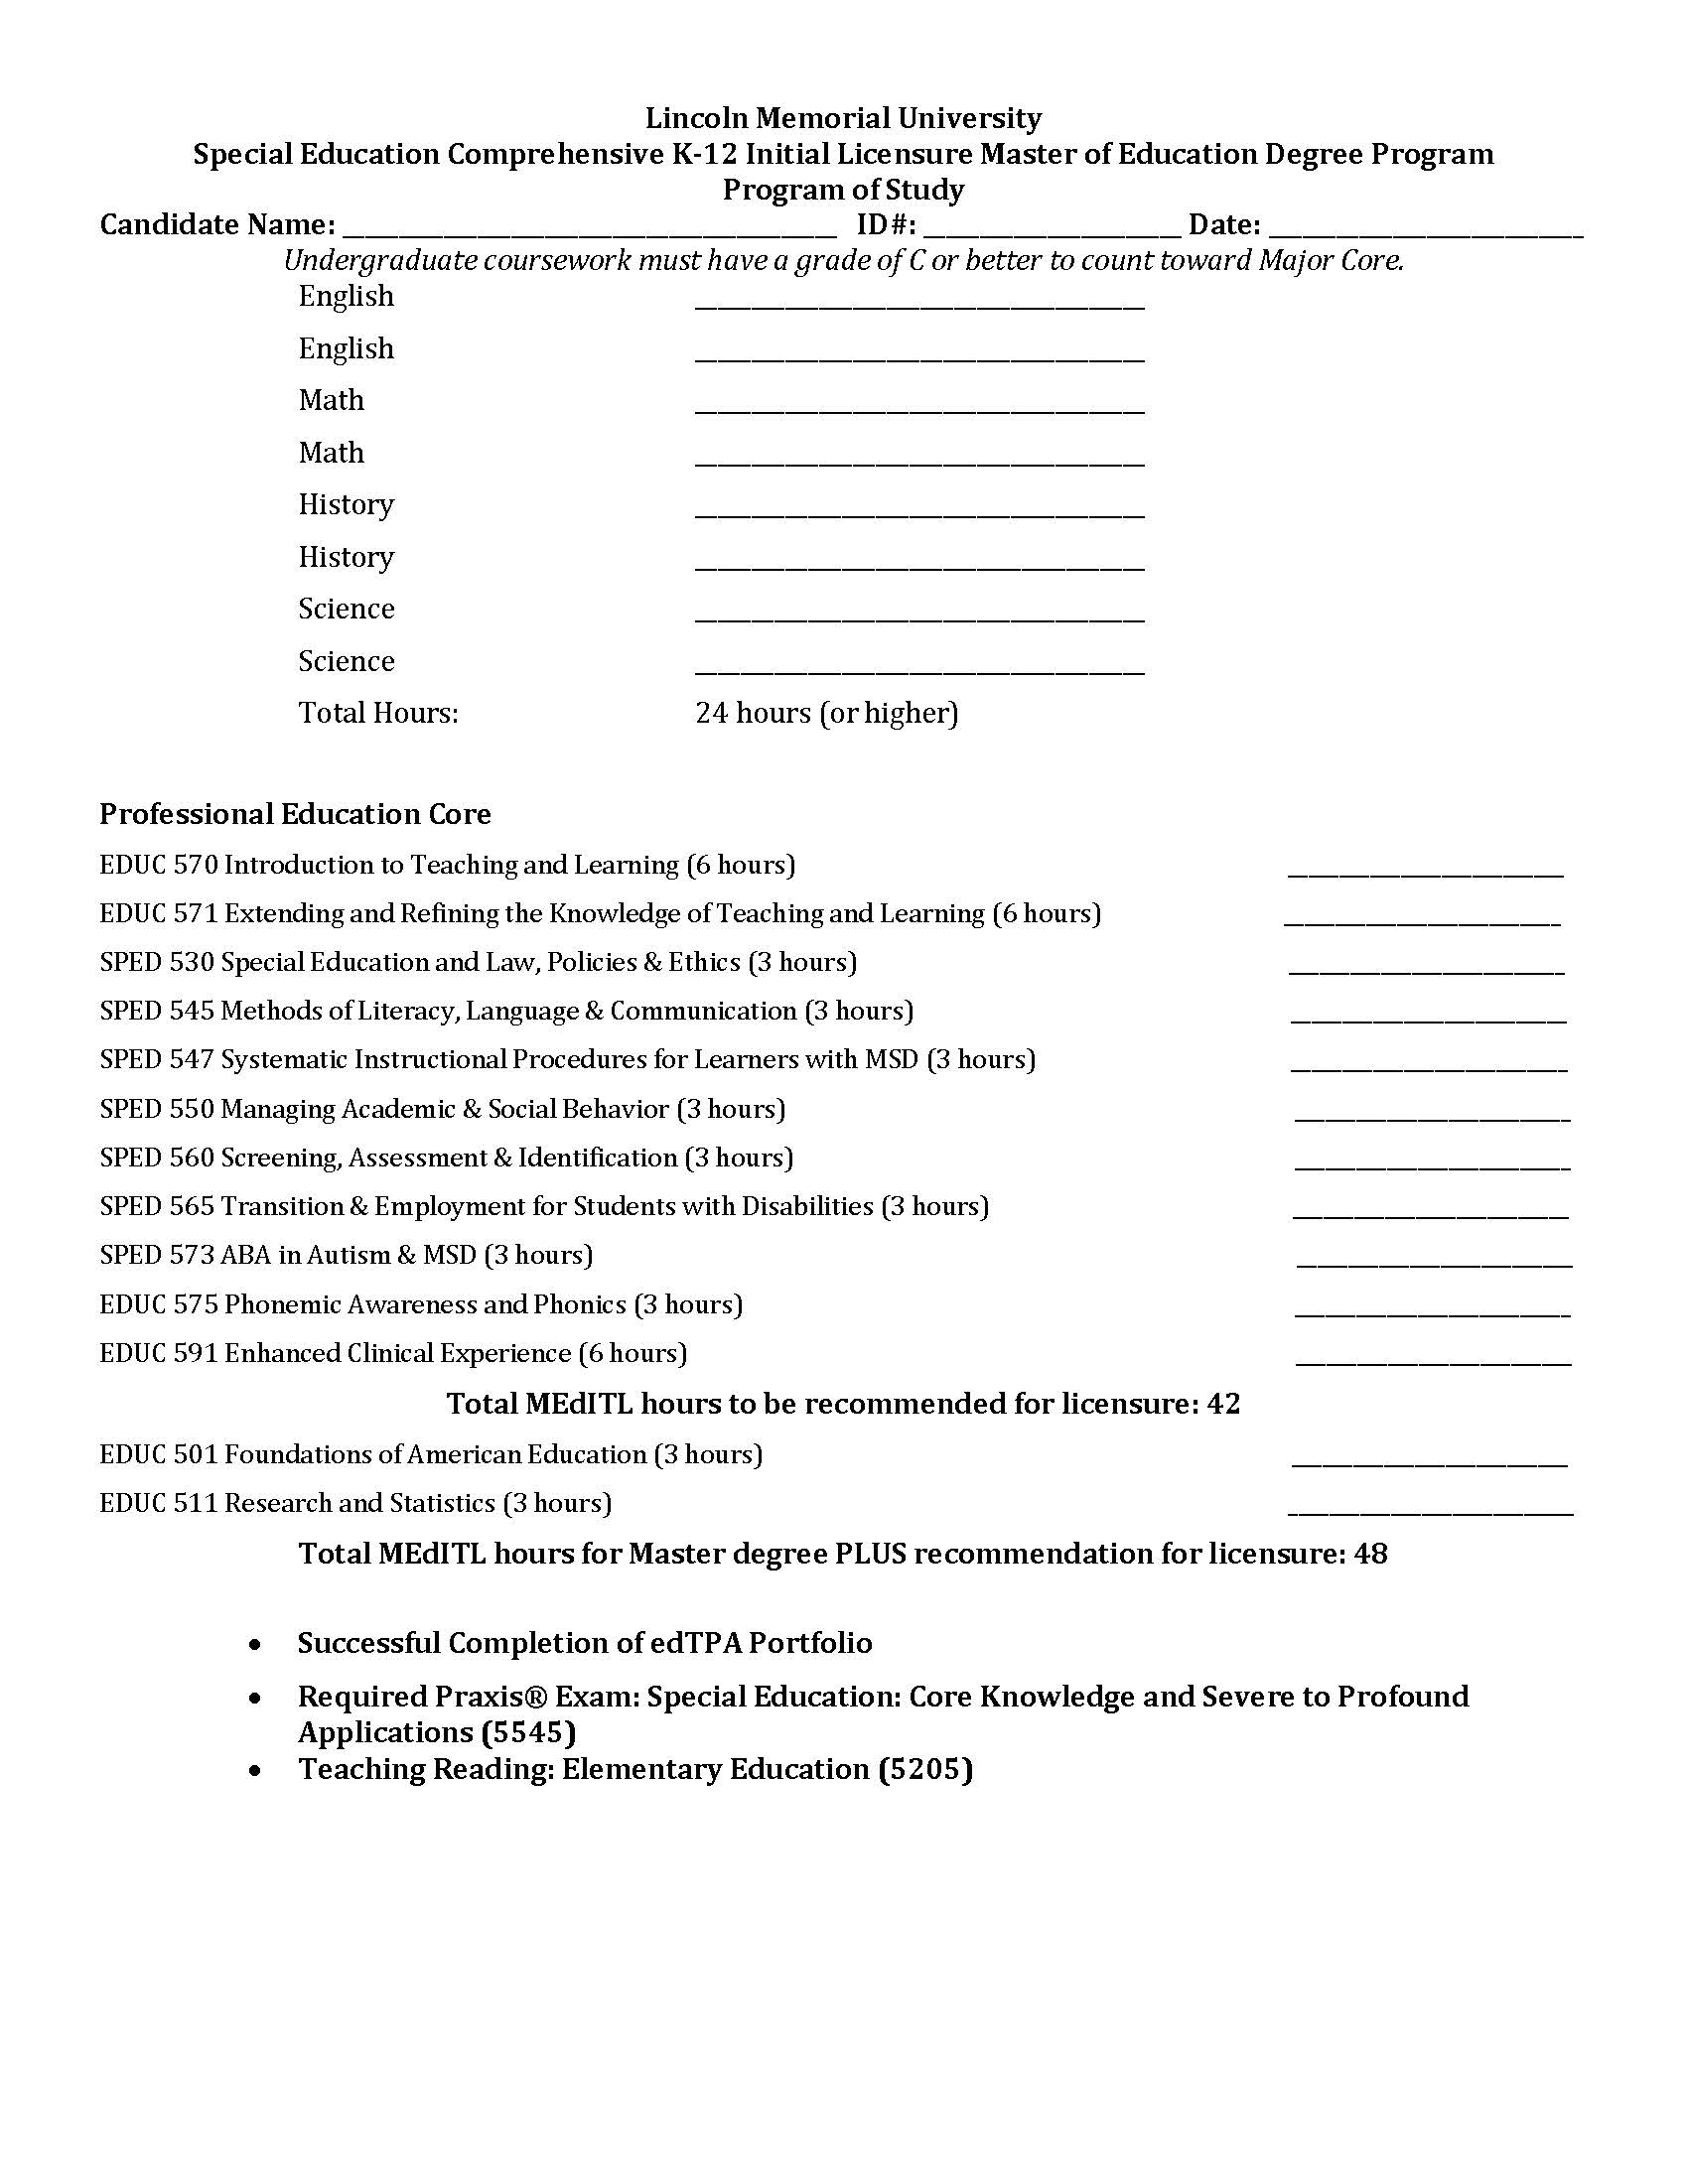 SPED Comprehensive K-12 Program of Study